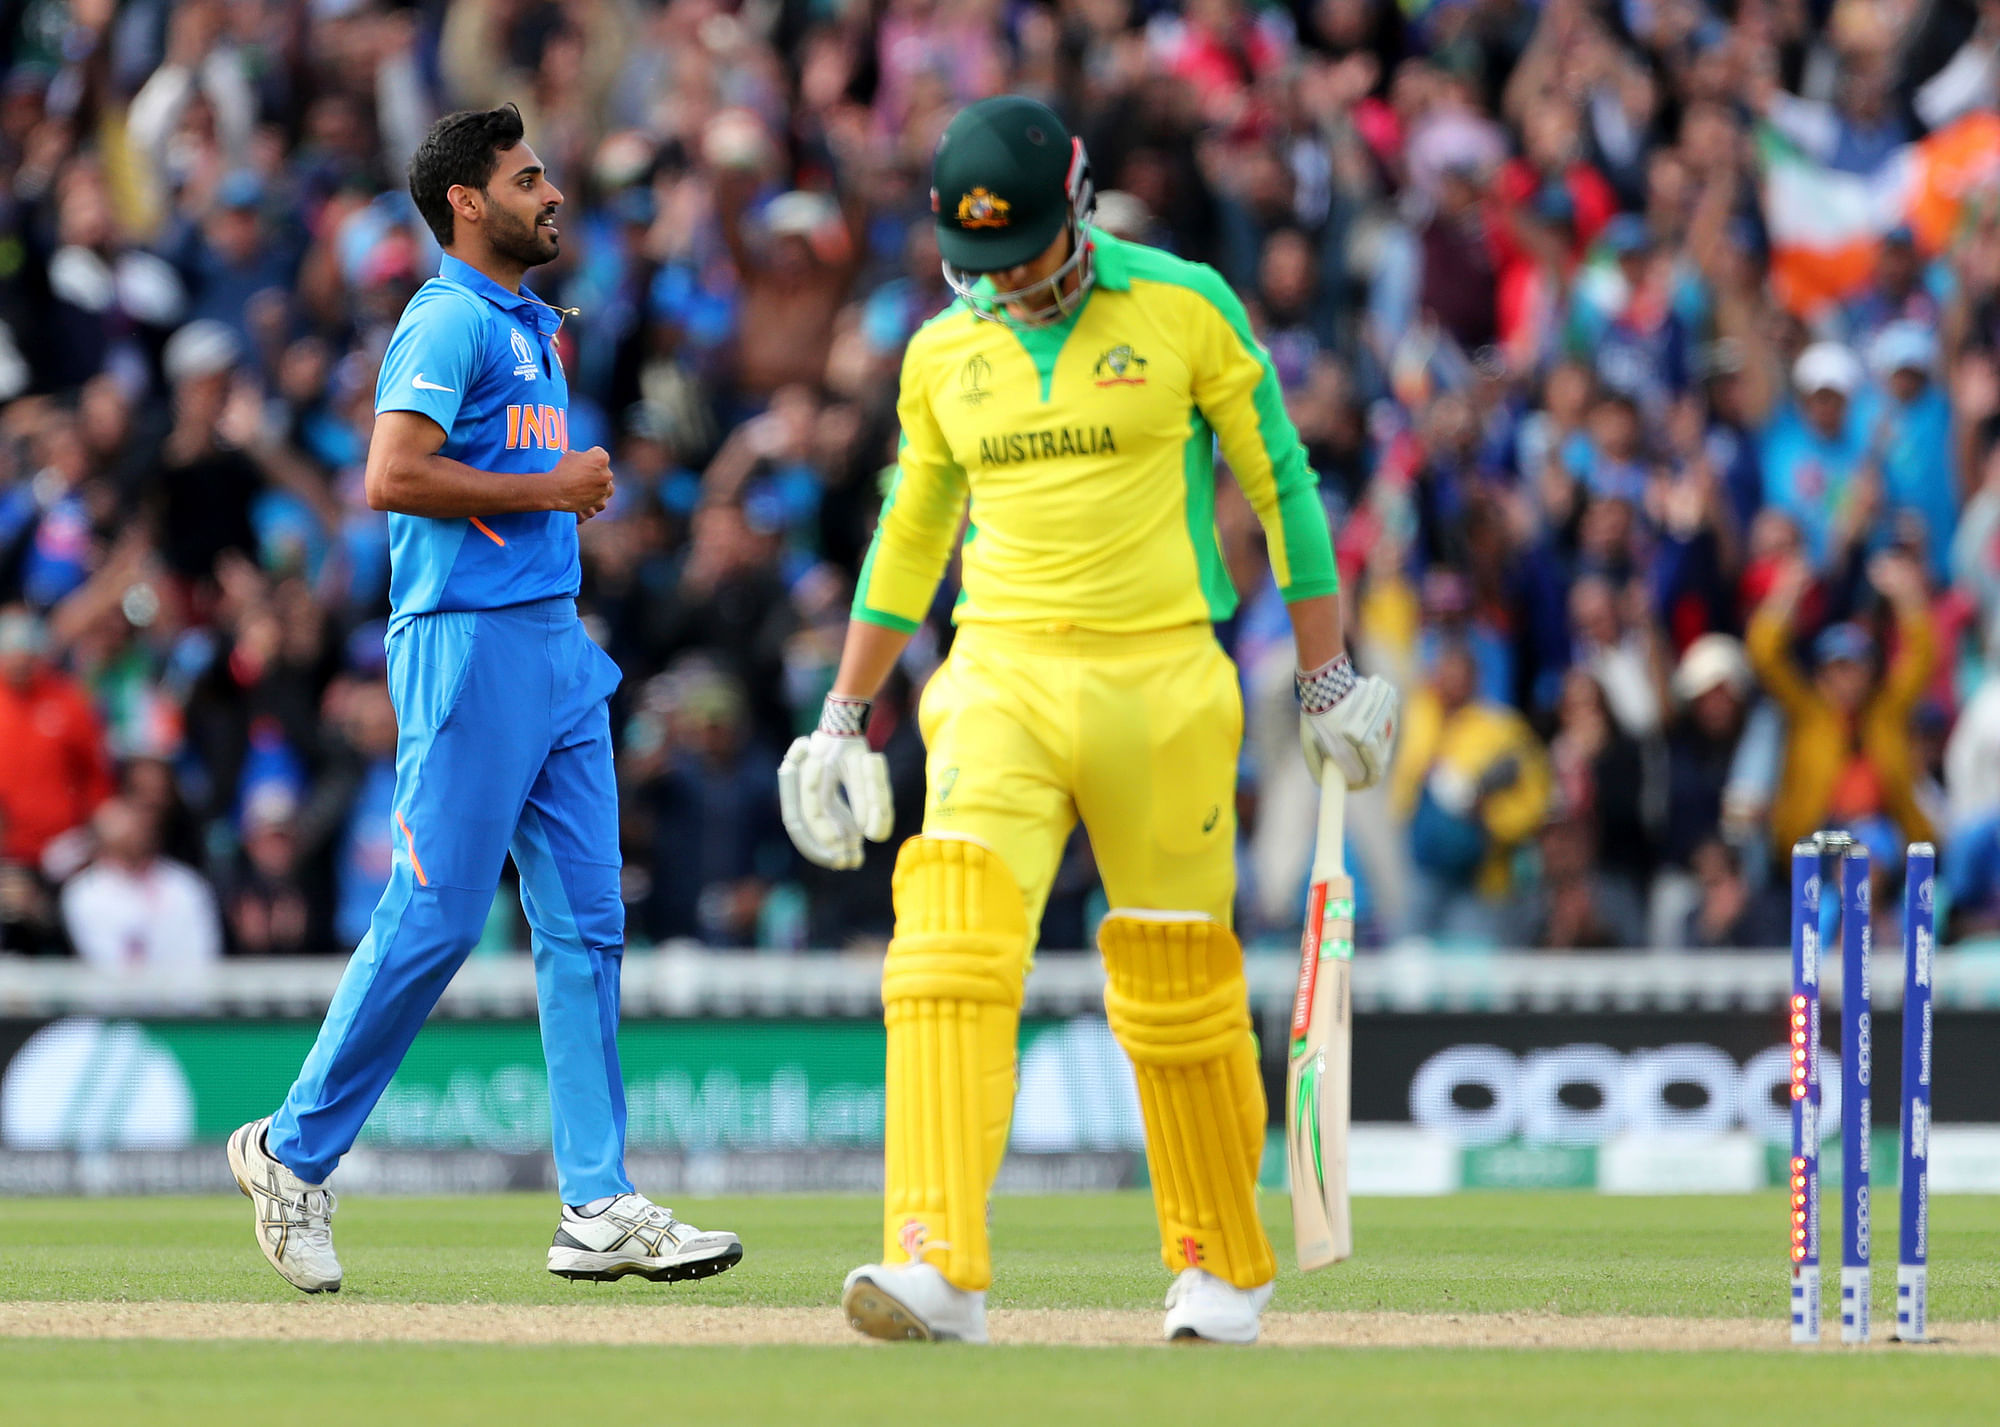 India vs Aus Live Score, India vs Aus World Cup 2019 Live Cricket Score